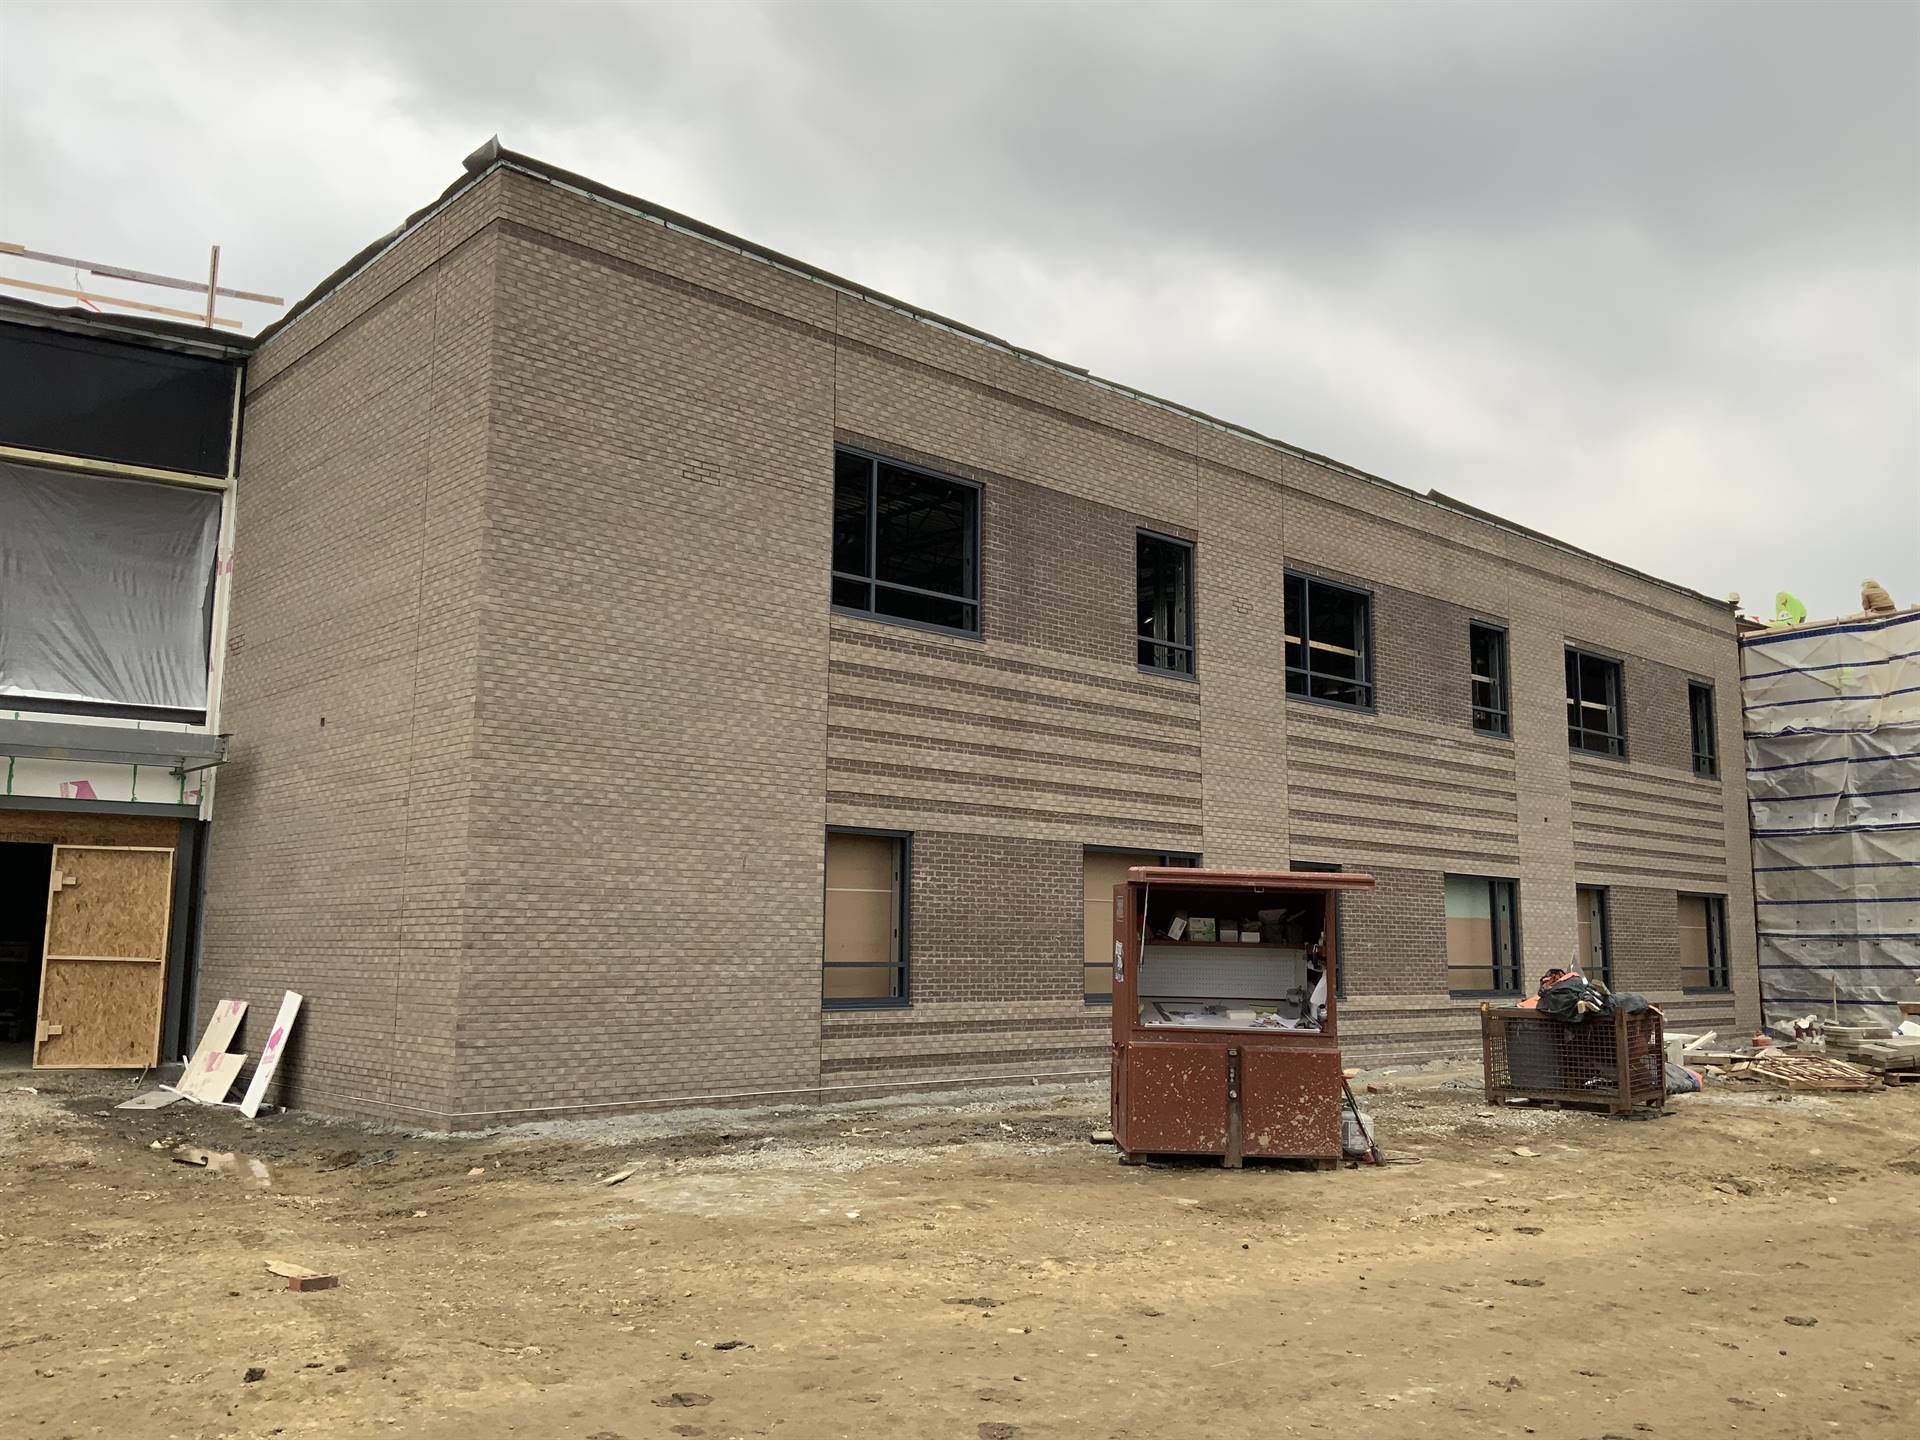 Exterior brick work on the new Greensview Elementary School